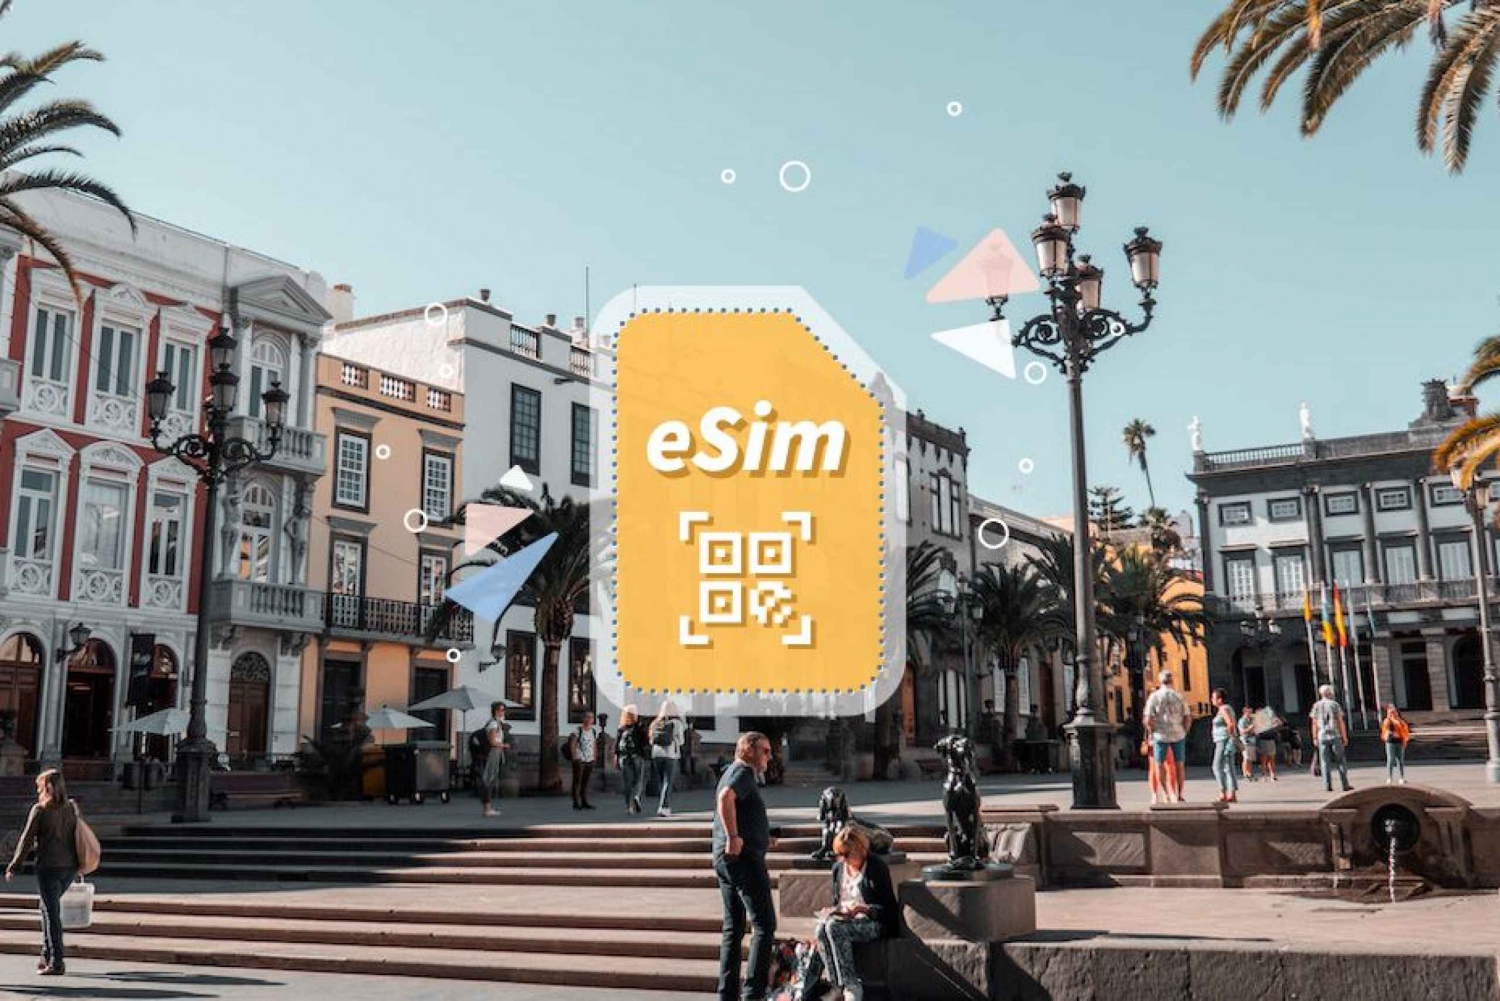 Hiszpania/Europa: Mobilny plan transmisji danych 5G eSim